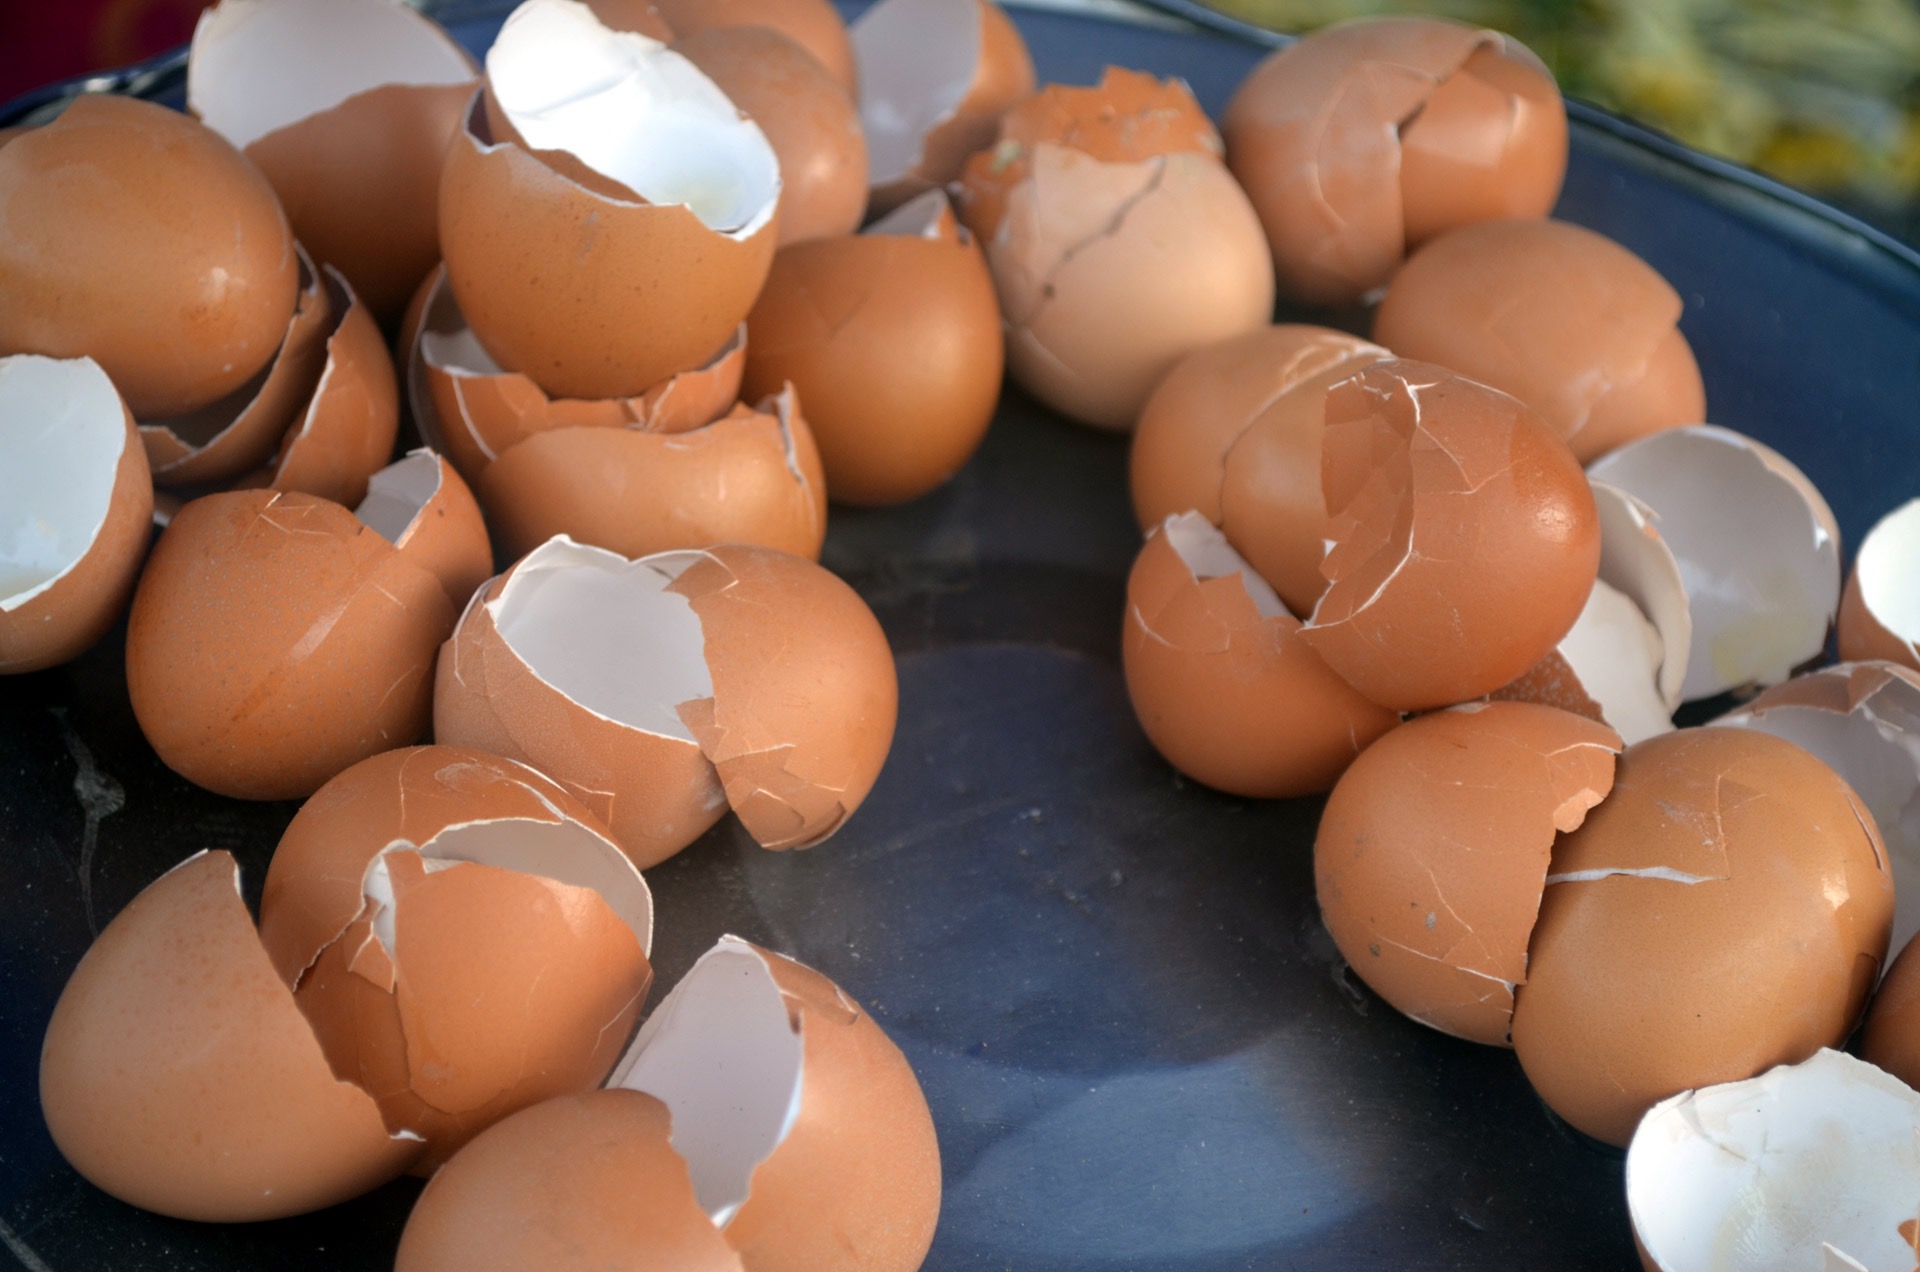 Source: https://www.needpix.com/photo/1315803/egg-shell-shells-broken-cooking-chicken-food